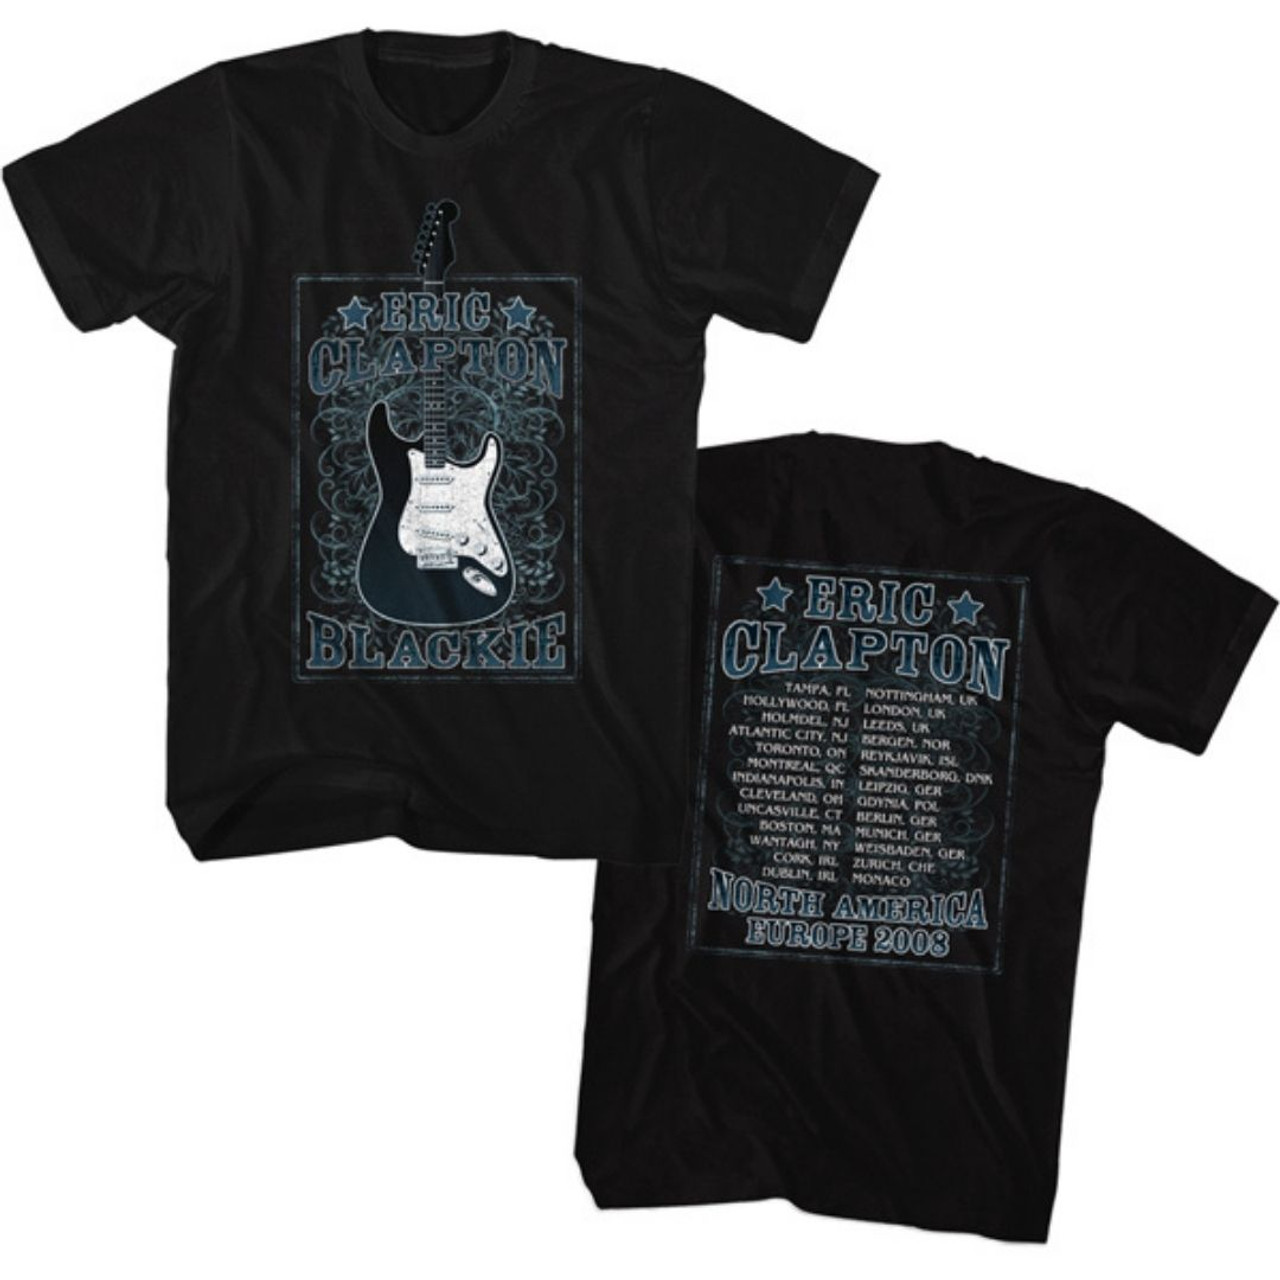 Eric Clapton Concert T-shirt - and North America Blackie Tour 2008. Men's Black Fashion Shirt - Rocker